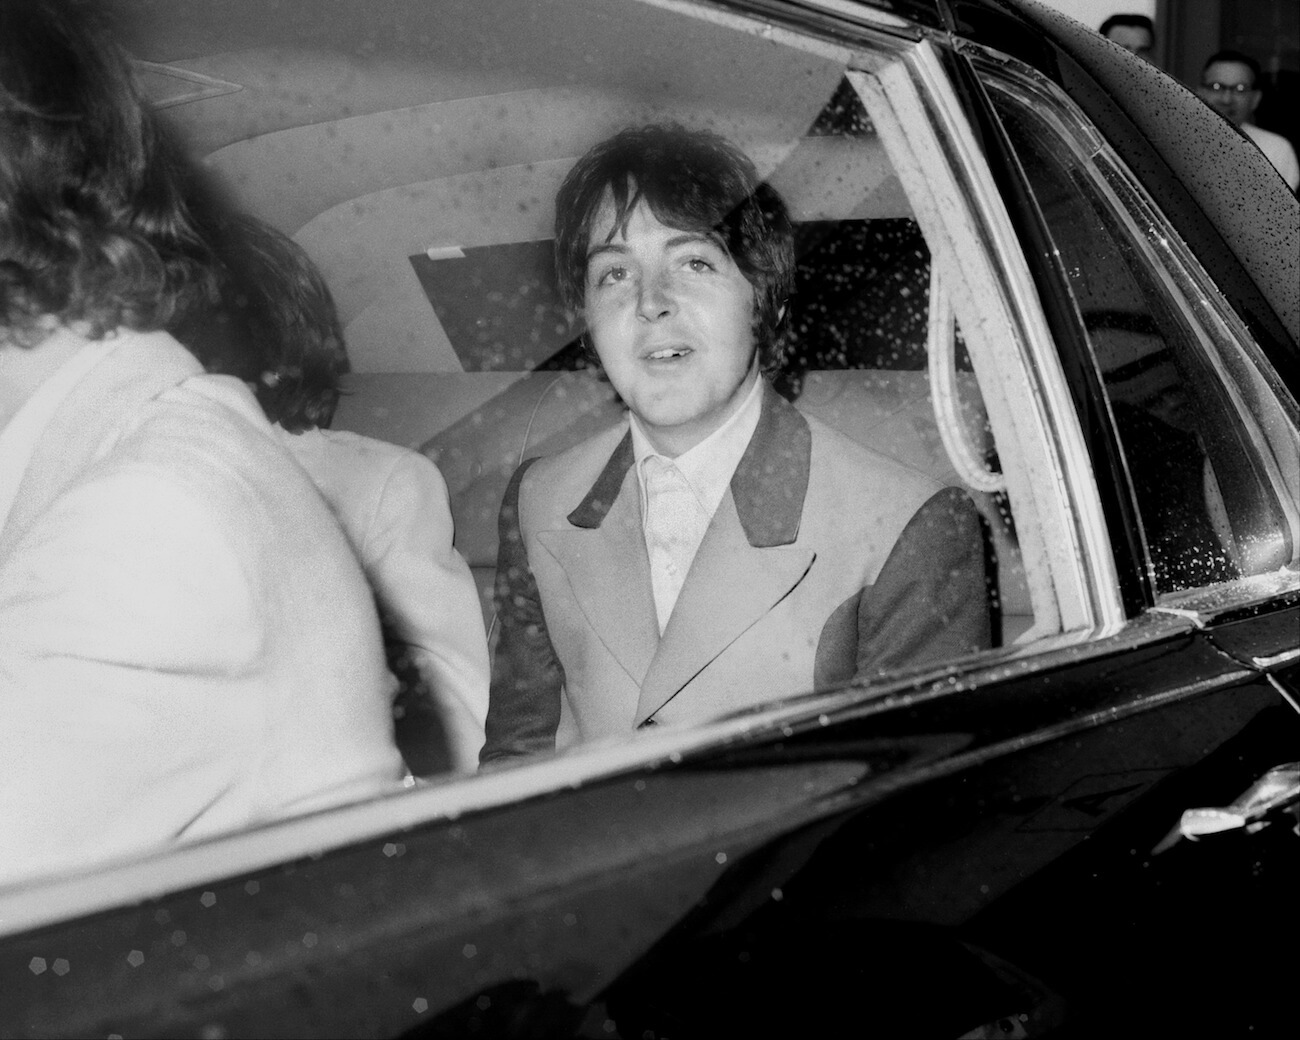 Paul McCartney in a car in 1968.